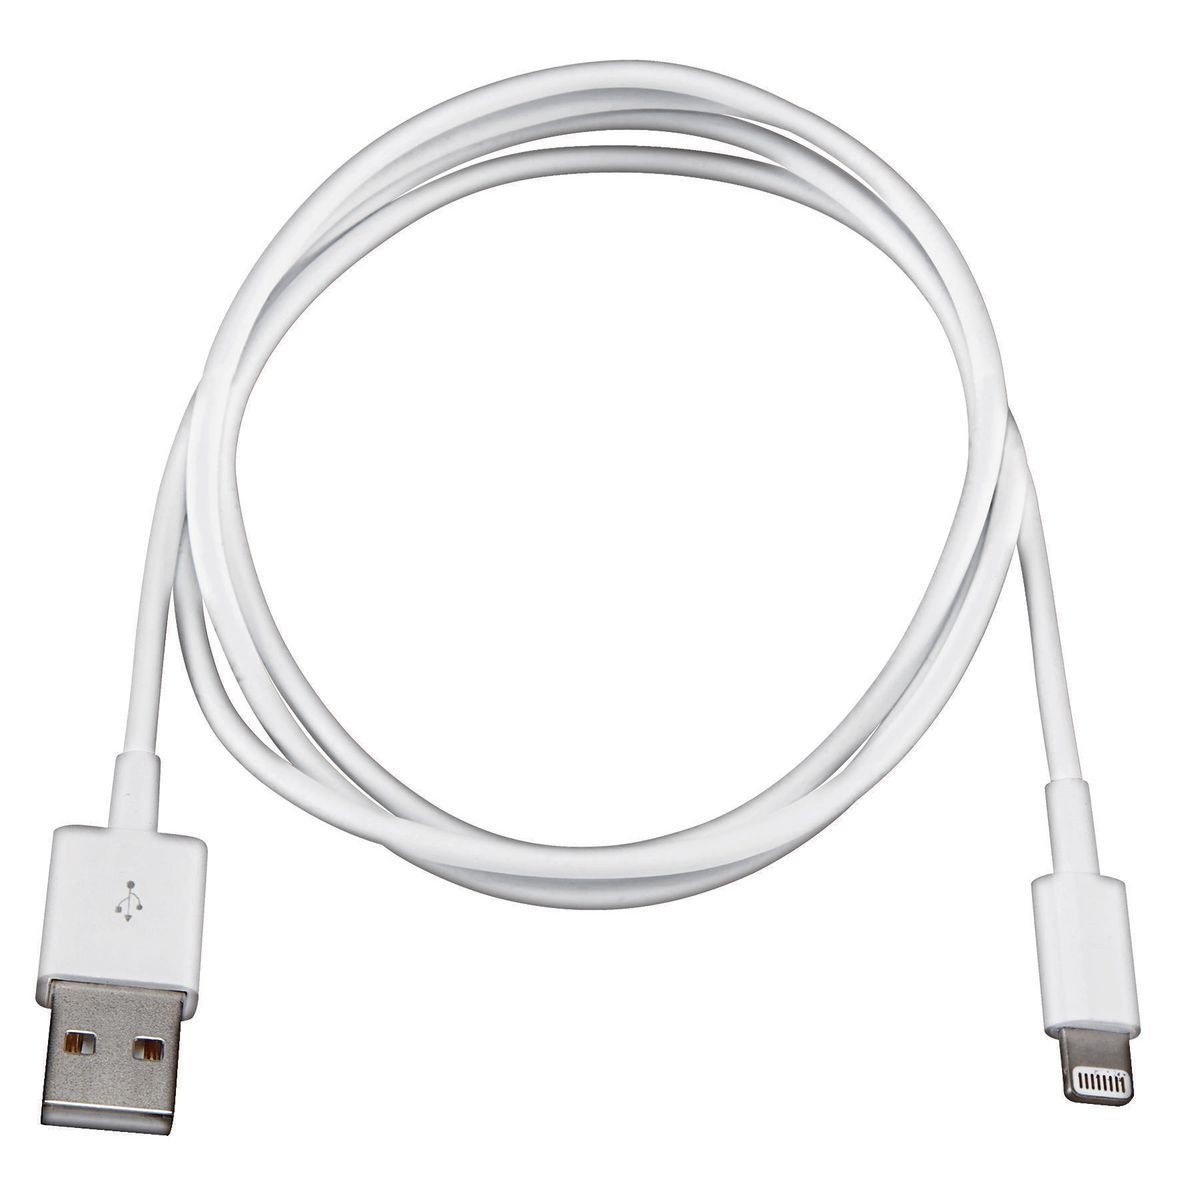 USB 3.0 Micro B Cable